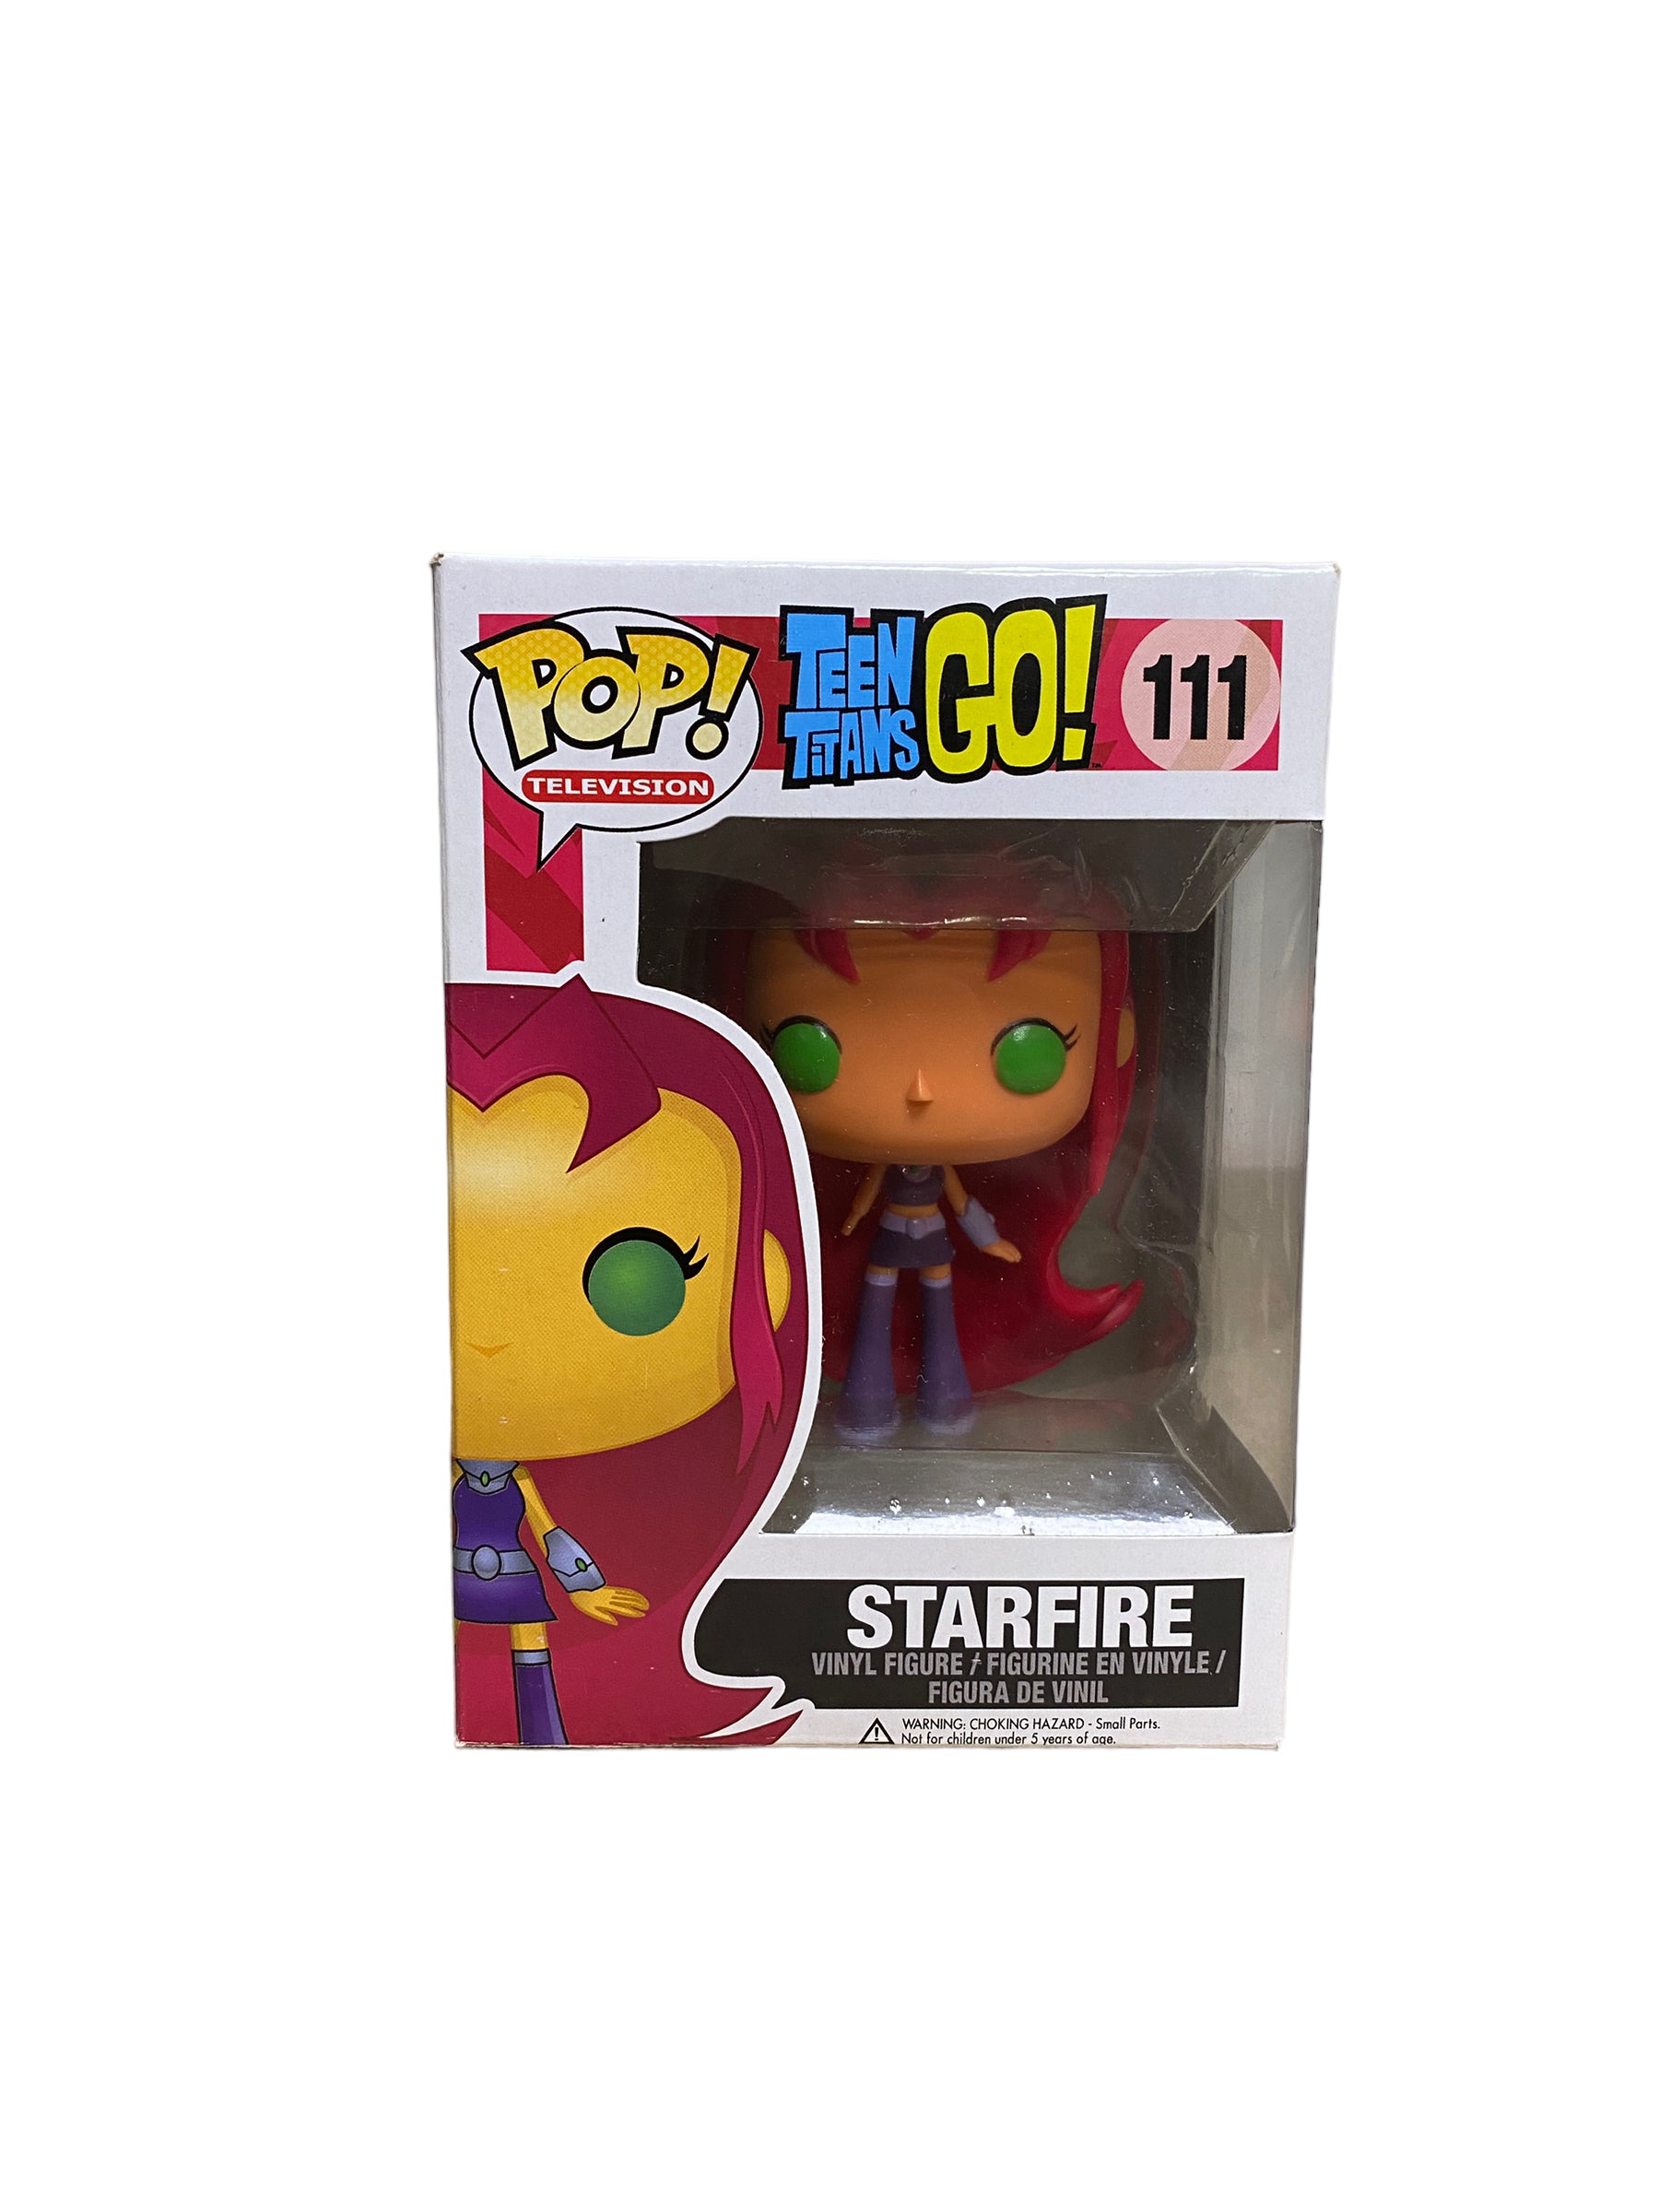 Starfire #111 Funko Pop! - Teen Titans Go! - 2014 Pop! - Condition 8.5/10